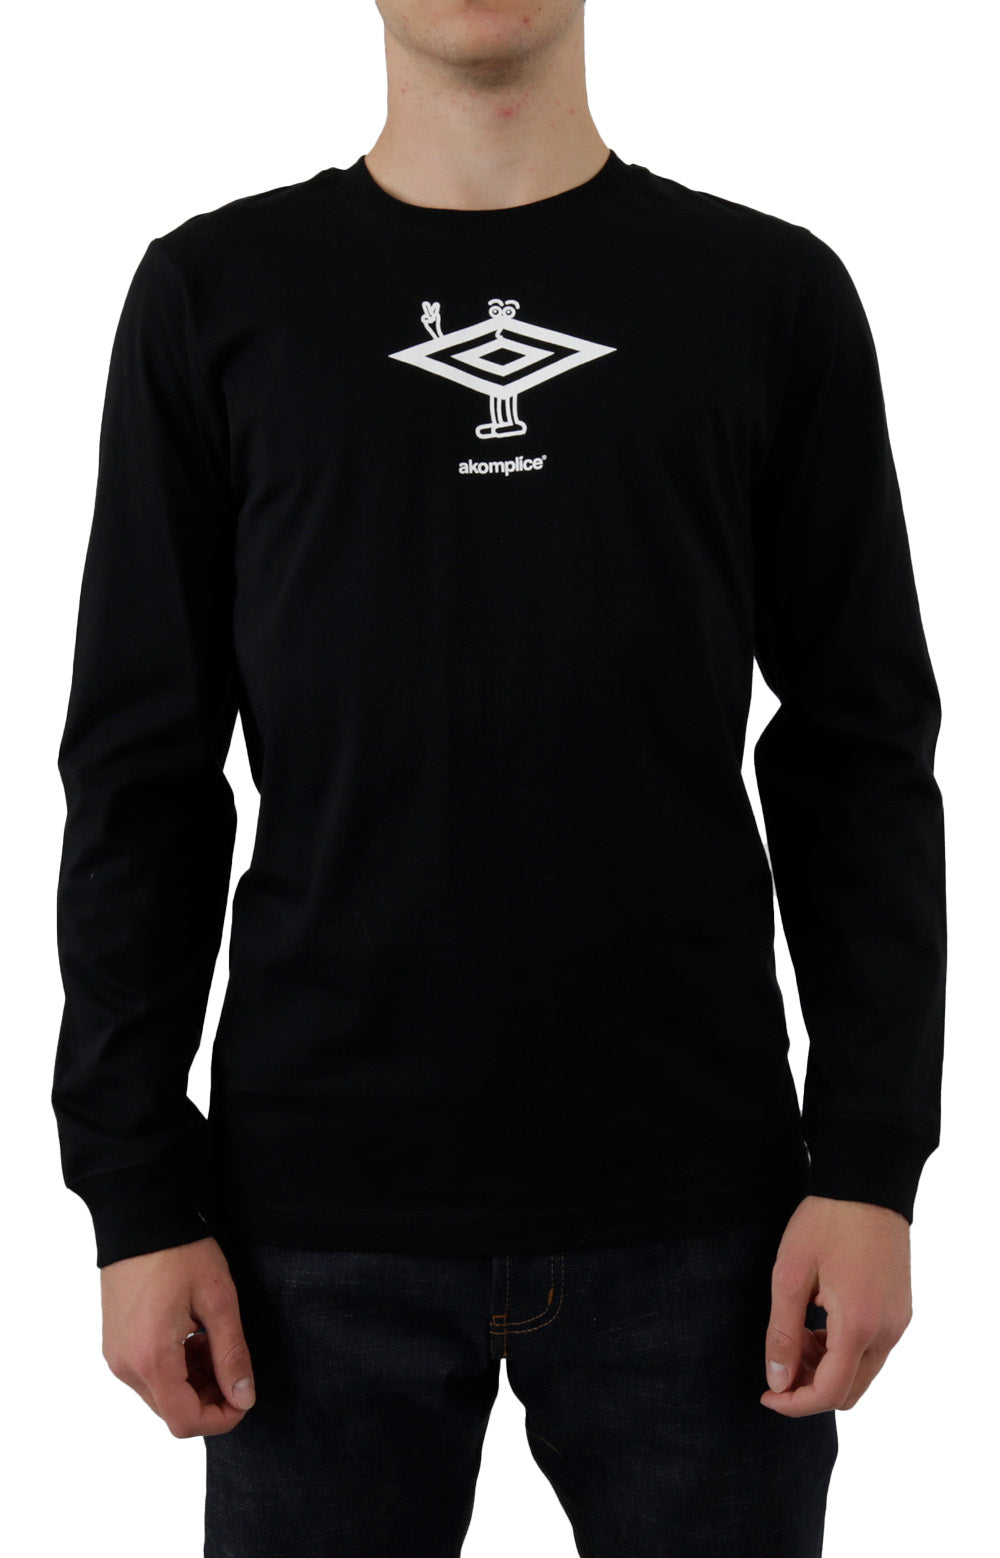 x Umbro Peaceman L/S Shirt - Black